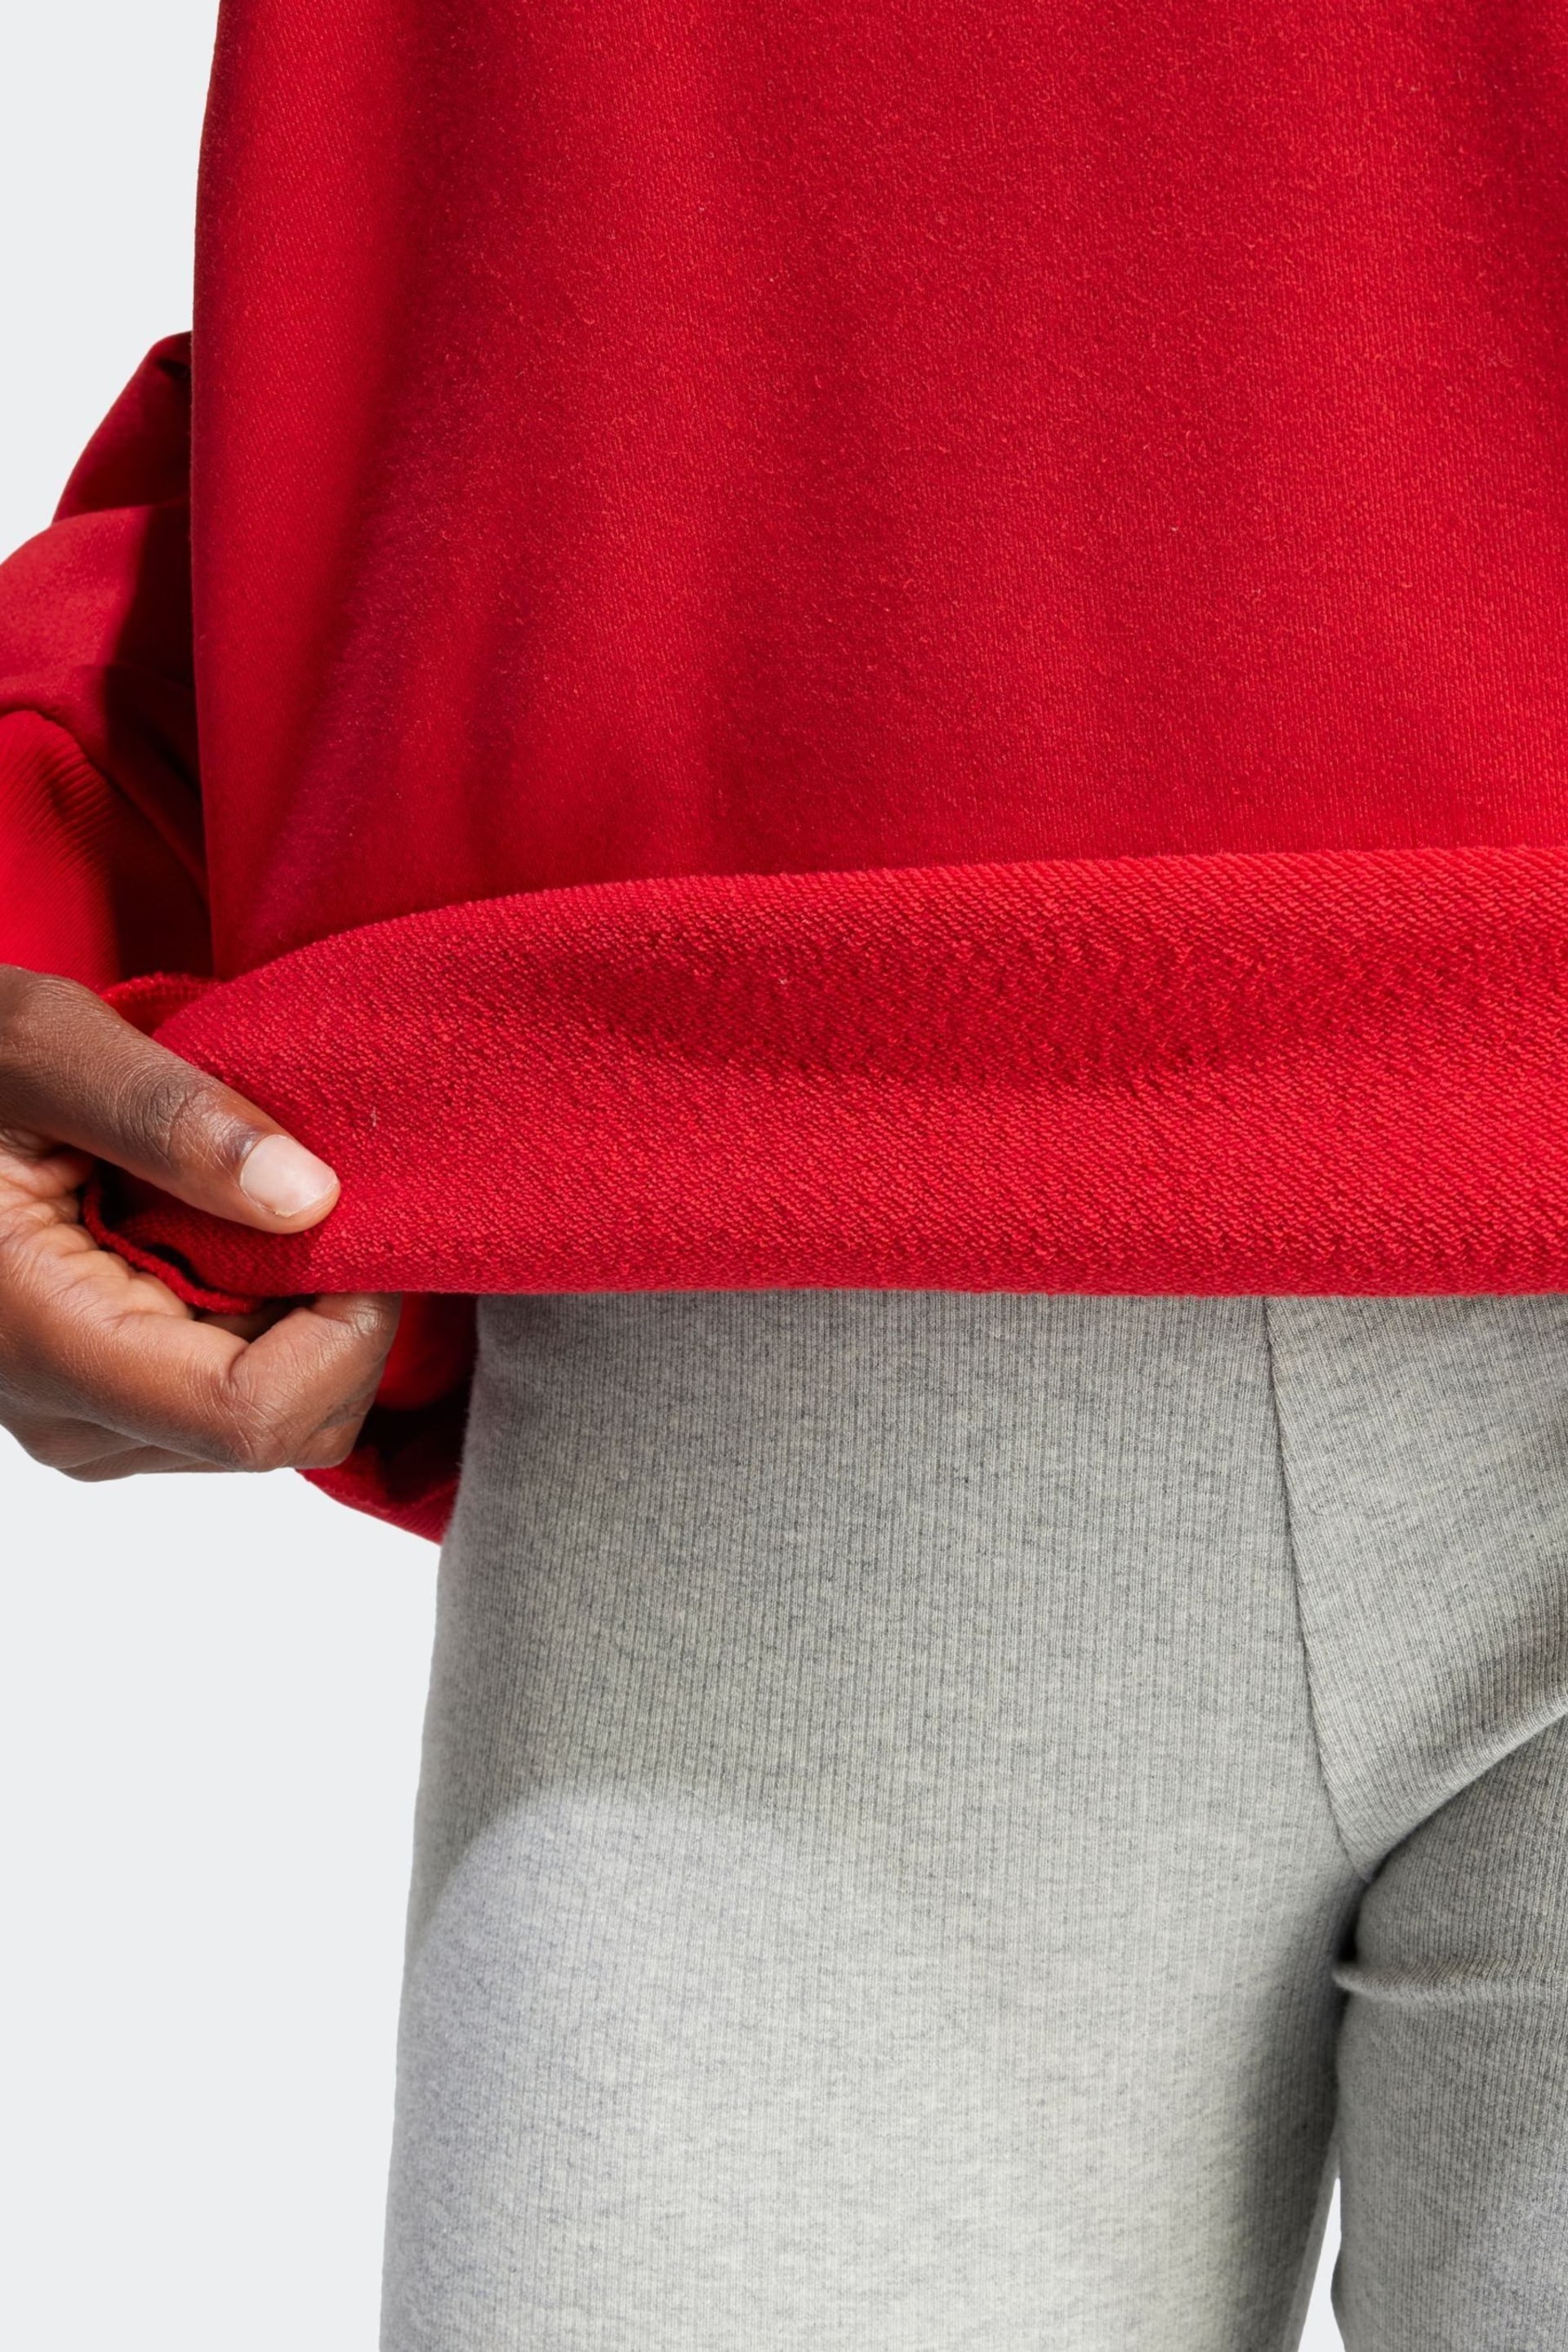 adidas Originals Red Trefoil Oversized Hoodie - Image 5 of 6